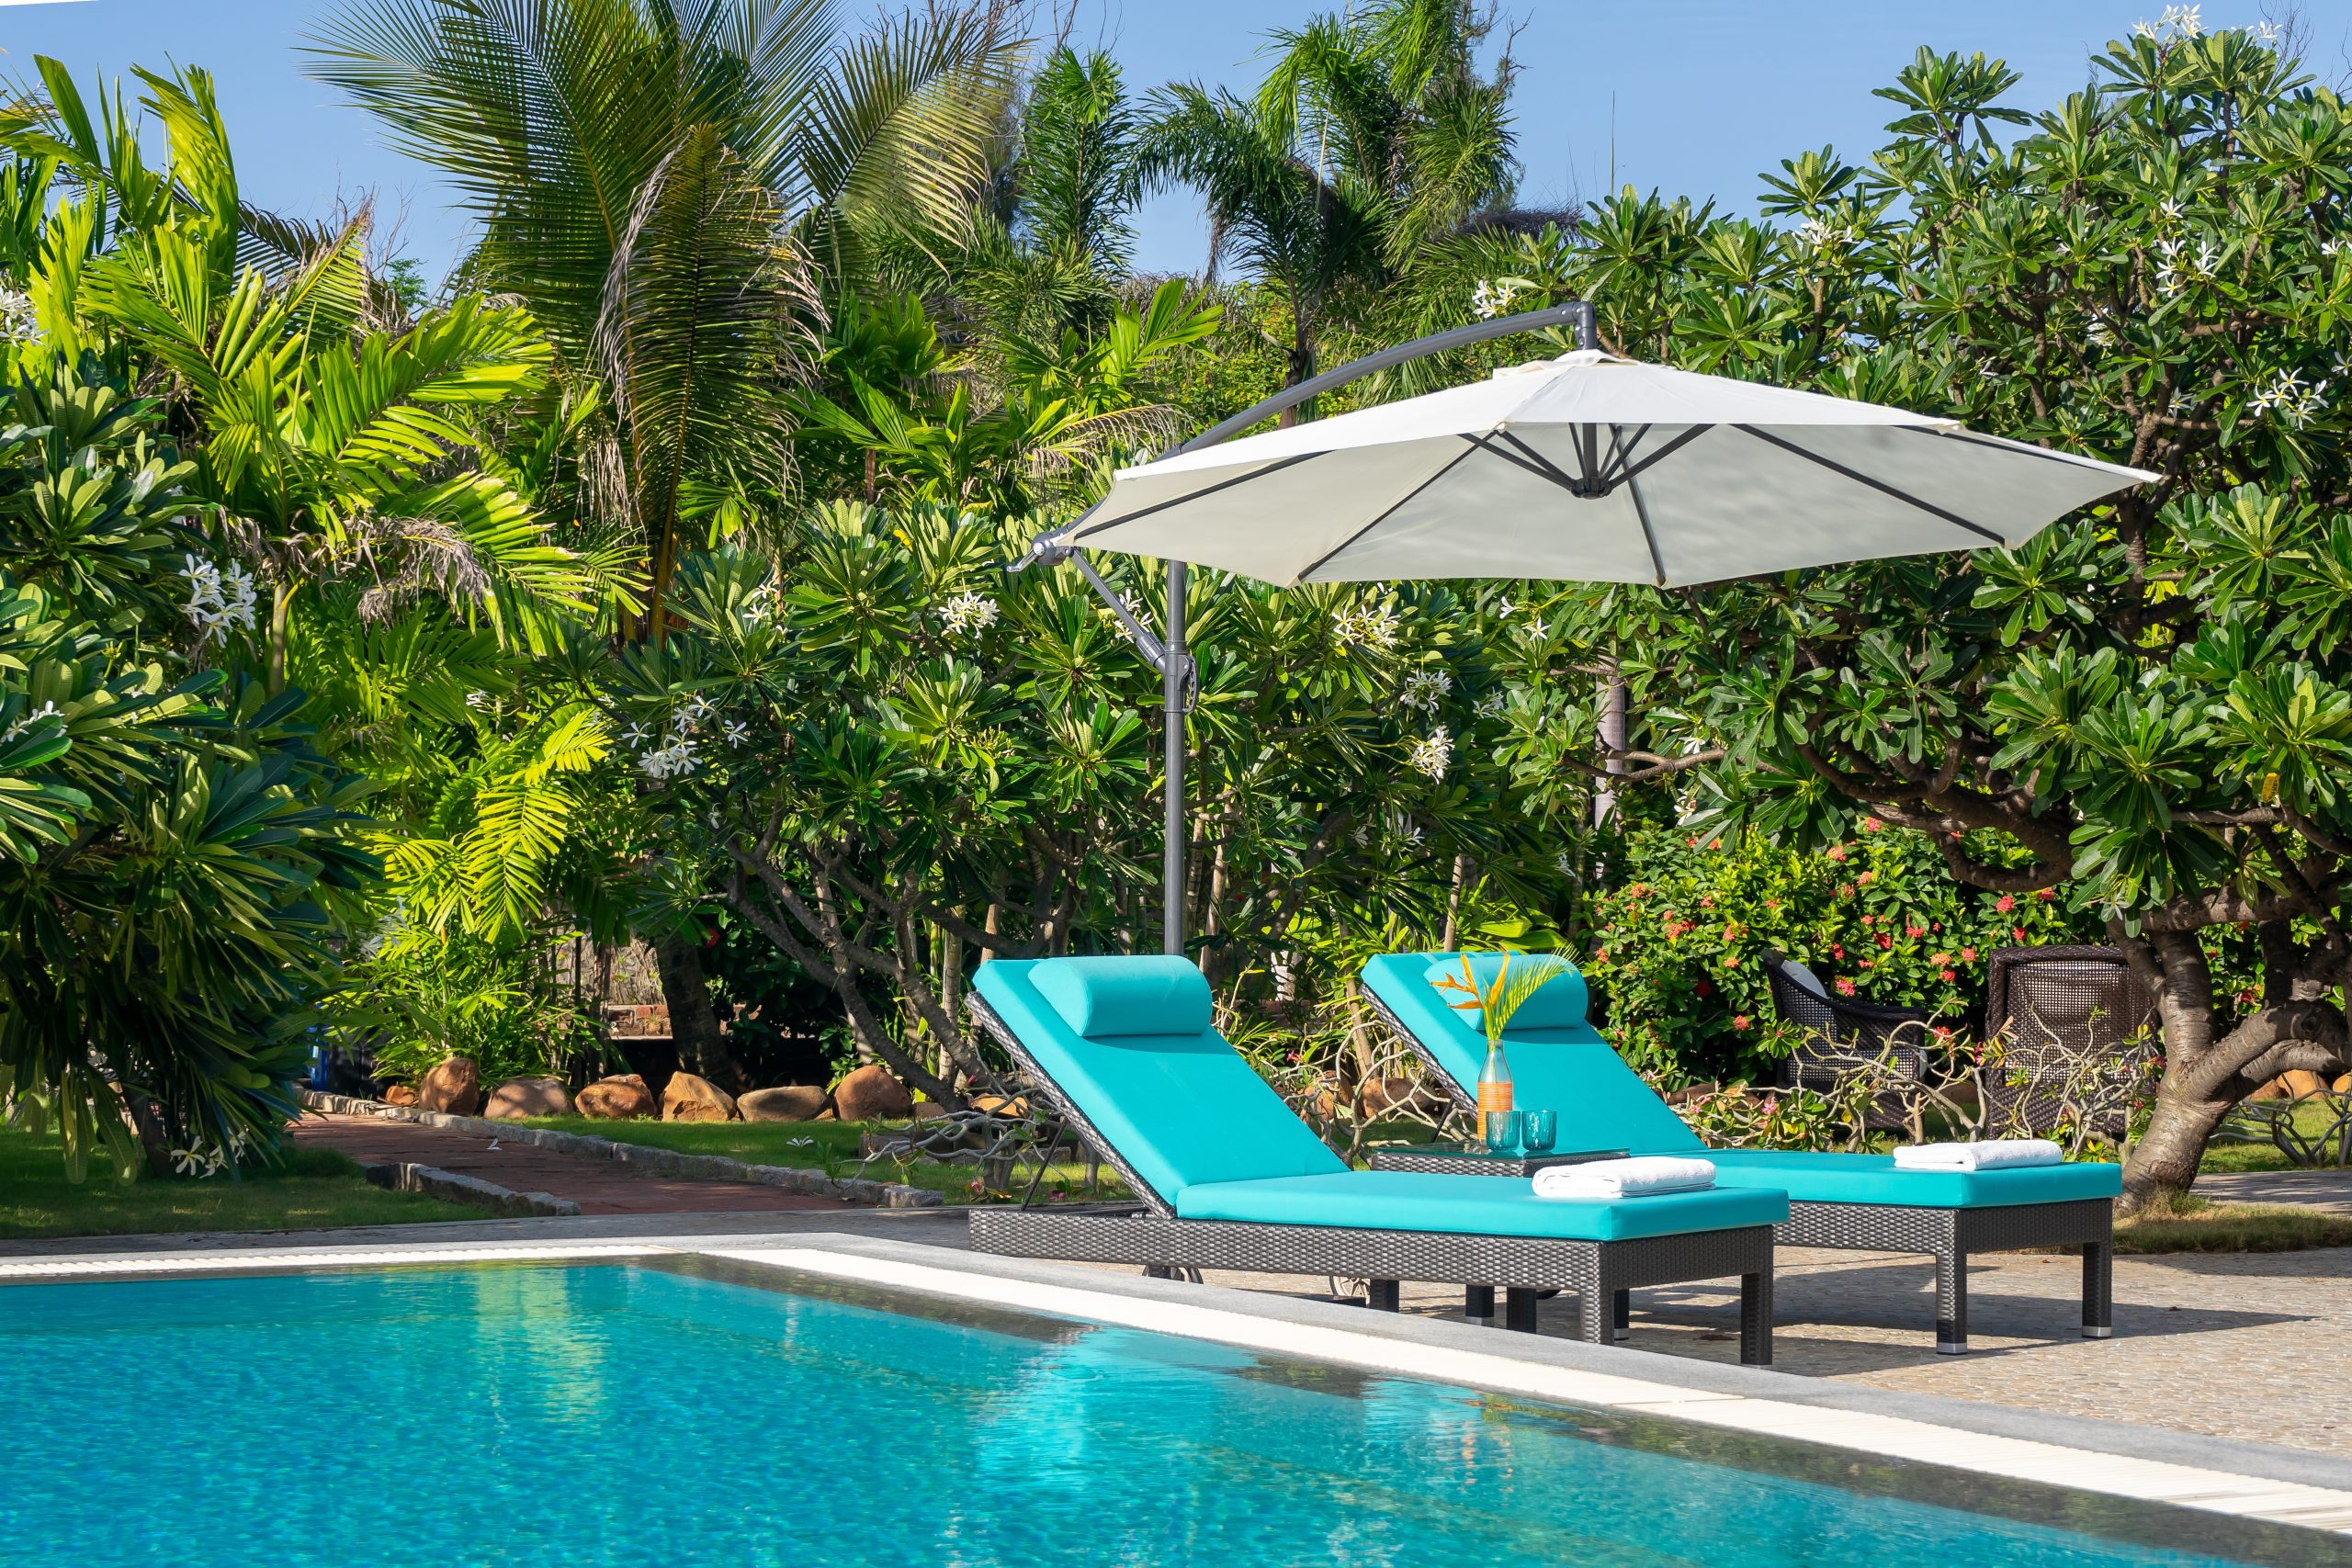 Poolside Umbrellas: Shade Options For Sunny Days